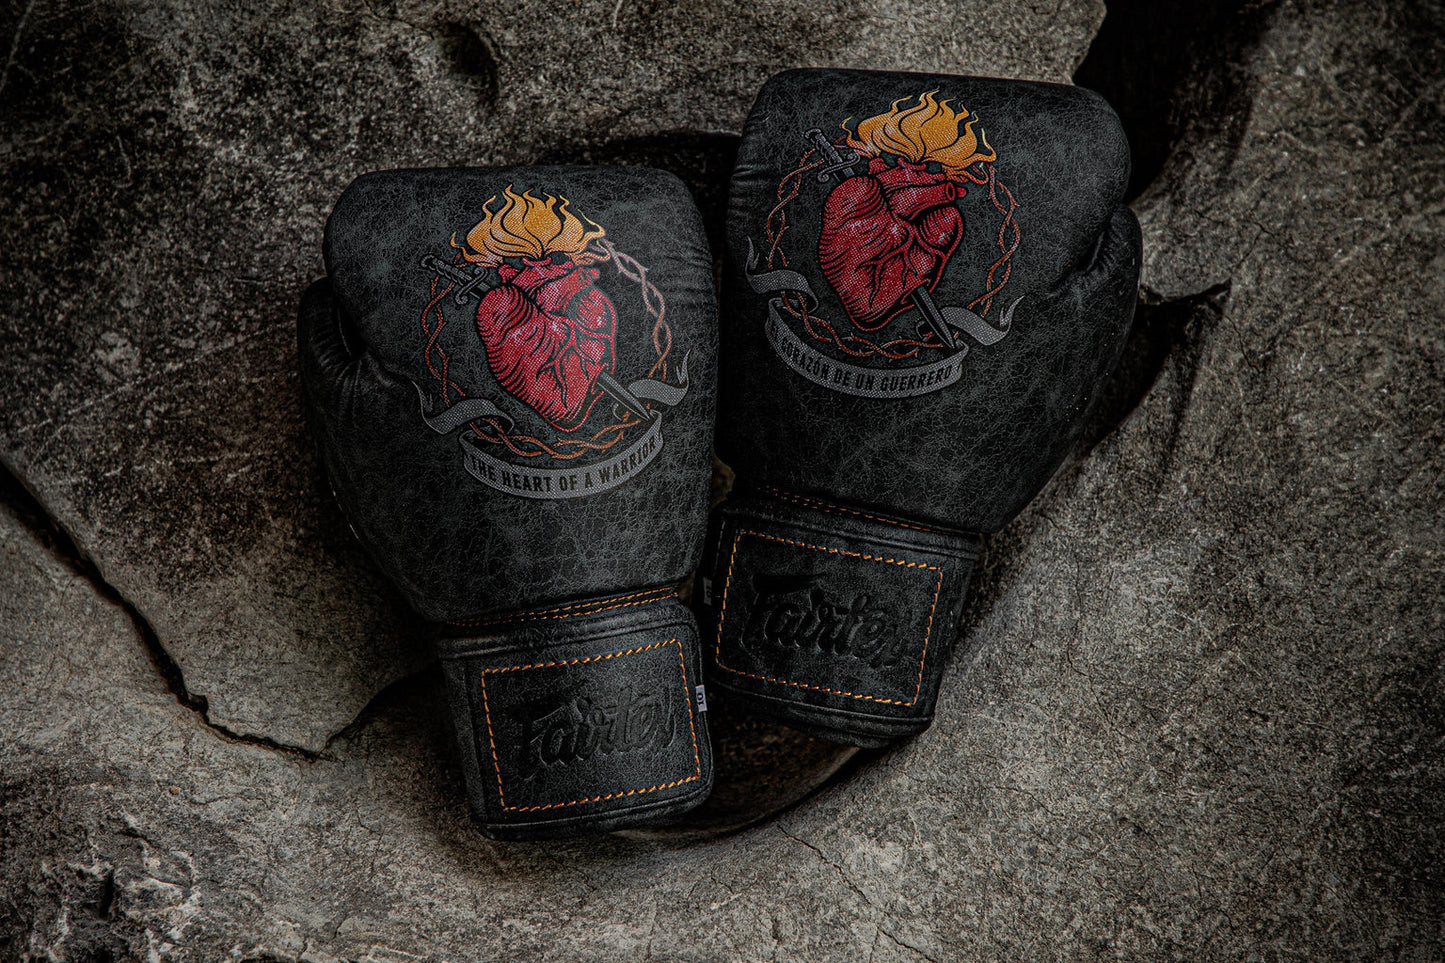 Fairtex BGV-The Heart of Warrior Premium Muay Thai Boxing Glove - Limited Edition - SUPER EXPORT SHOP